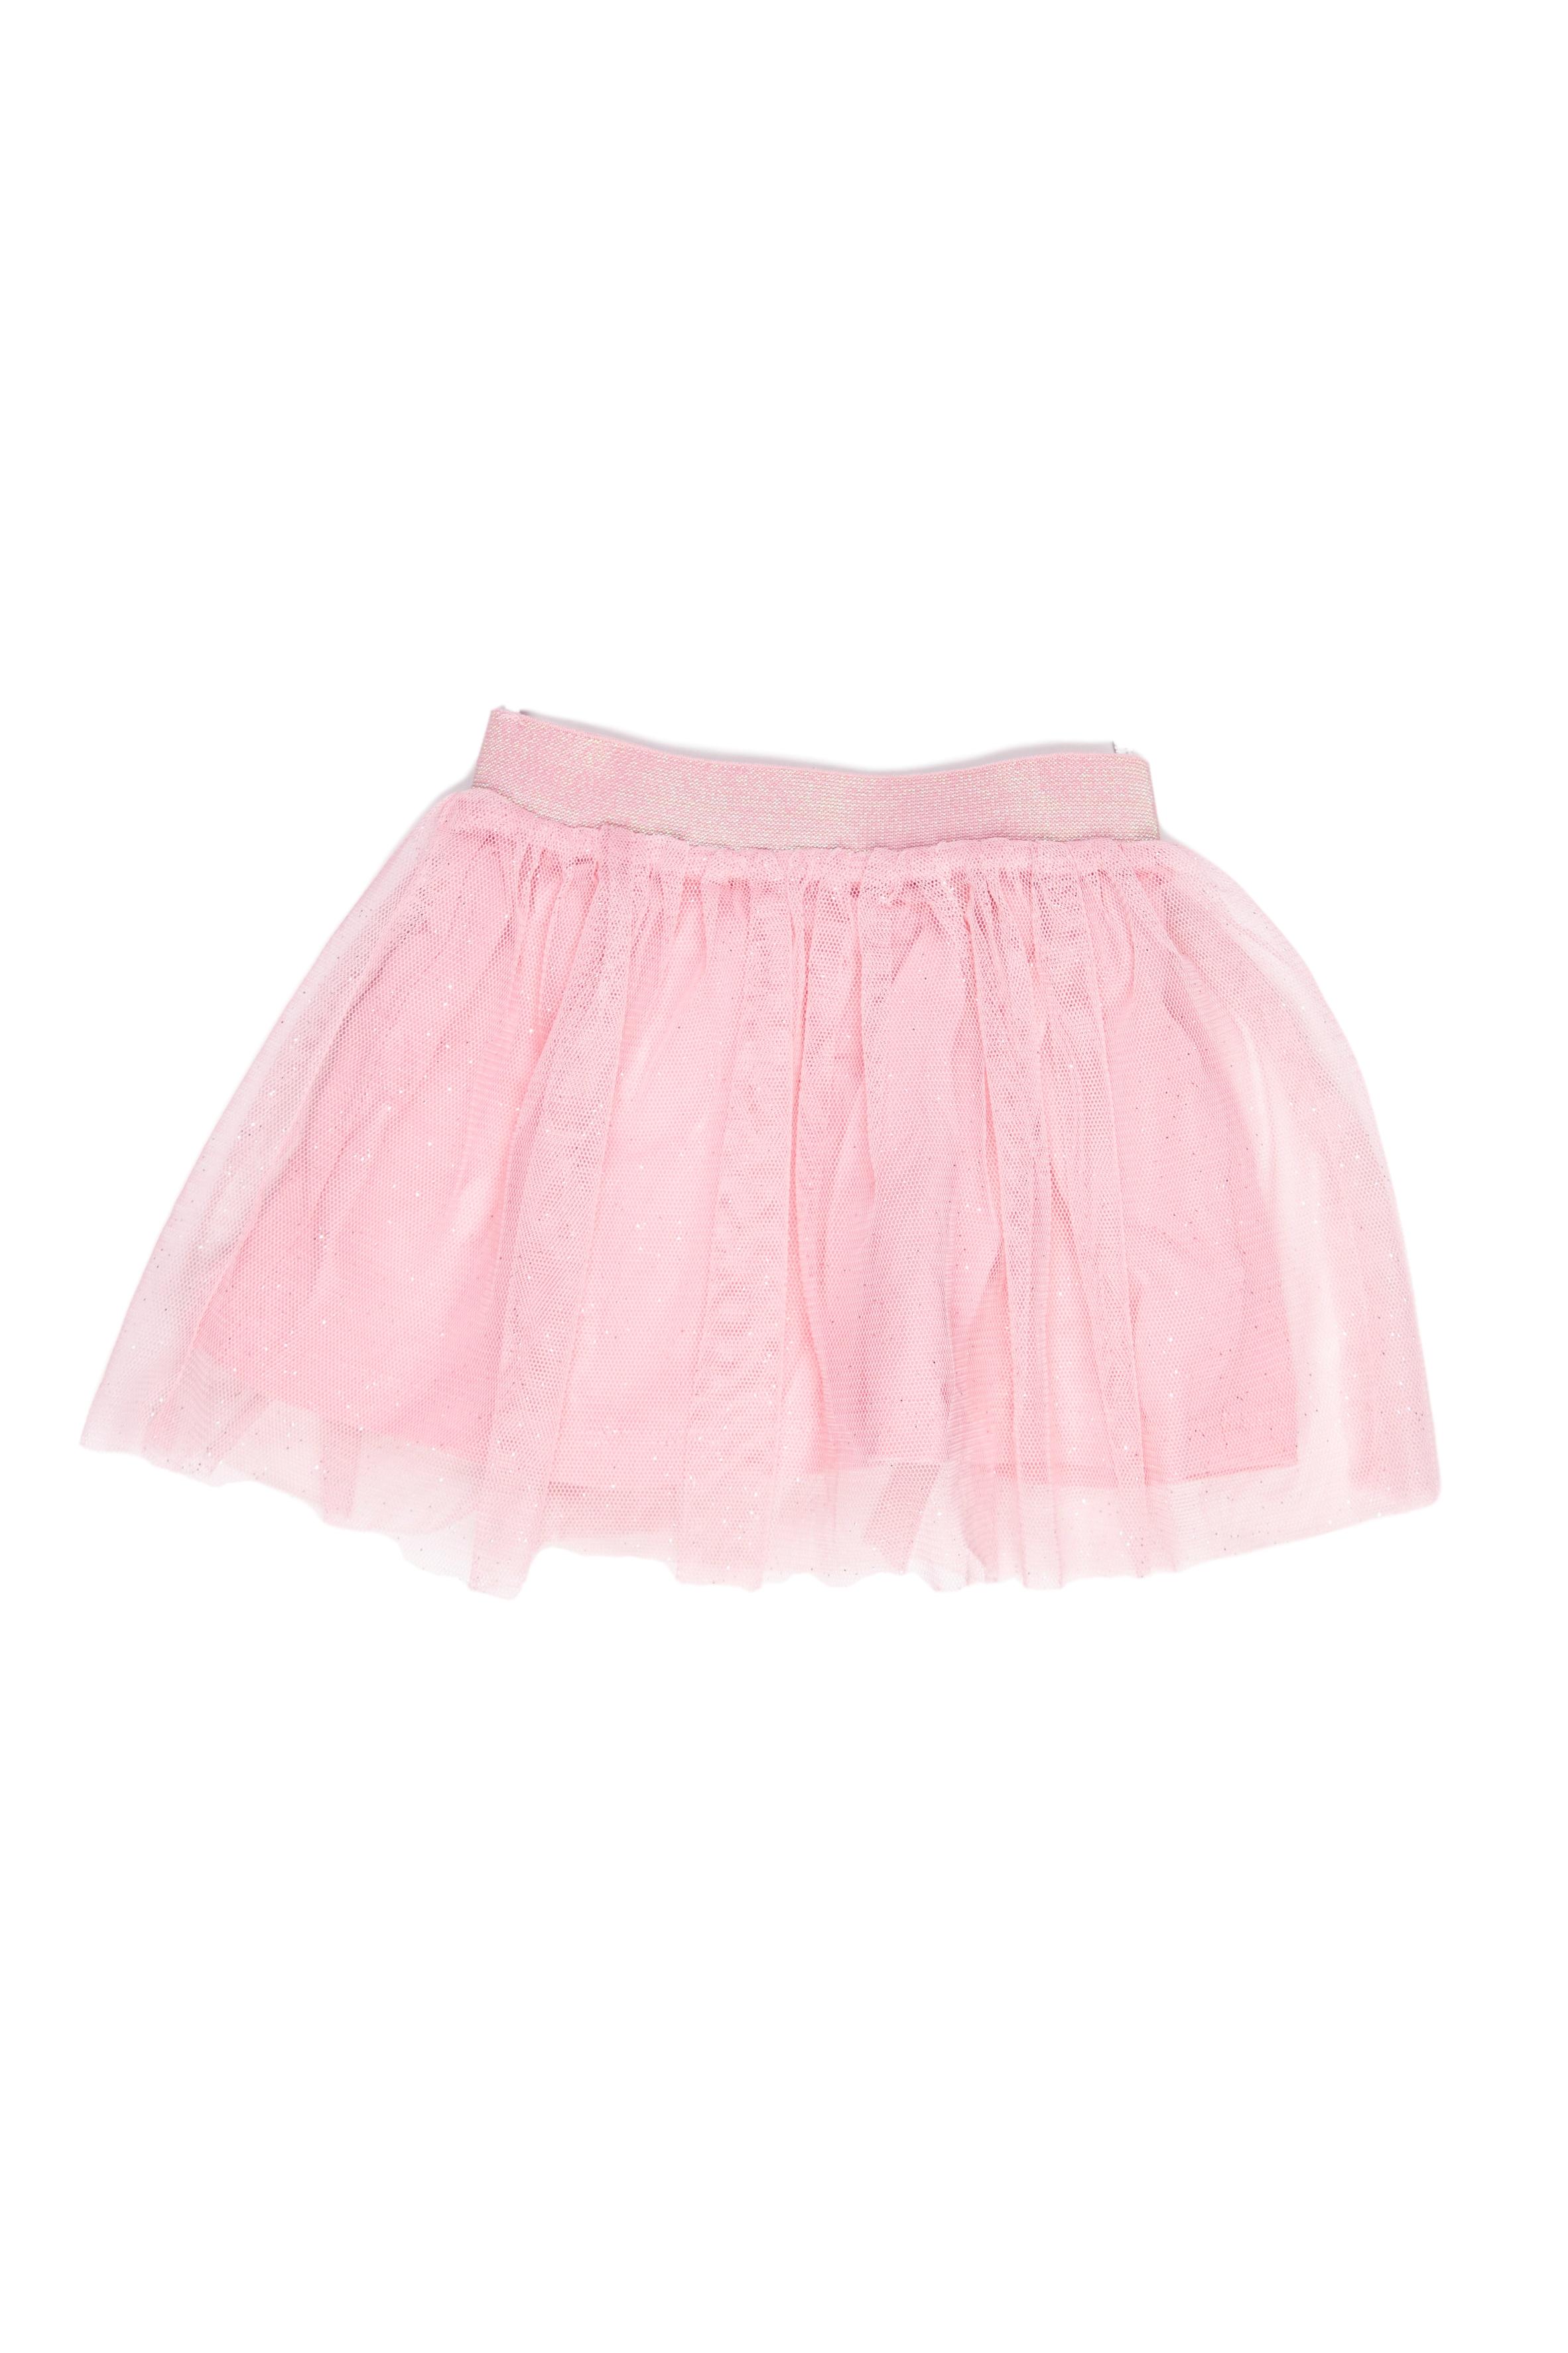 Tutú rosa pálido para mujer, tutú rosa, falda rosa, falda rosa pálido,  falda tutú rosa bebé, pequeña señorita